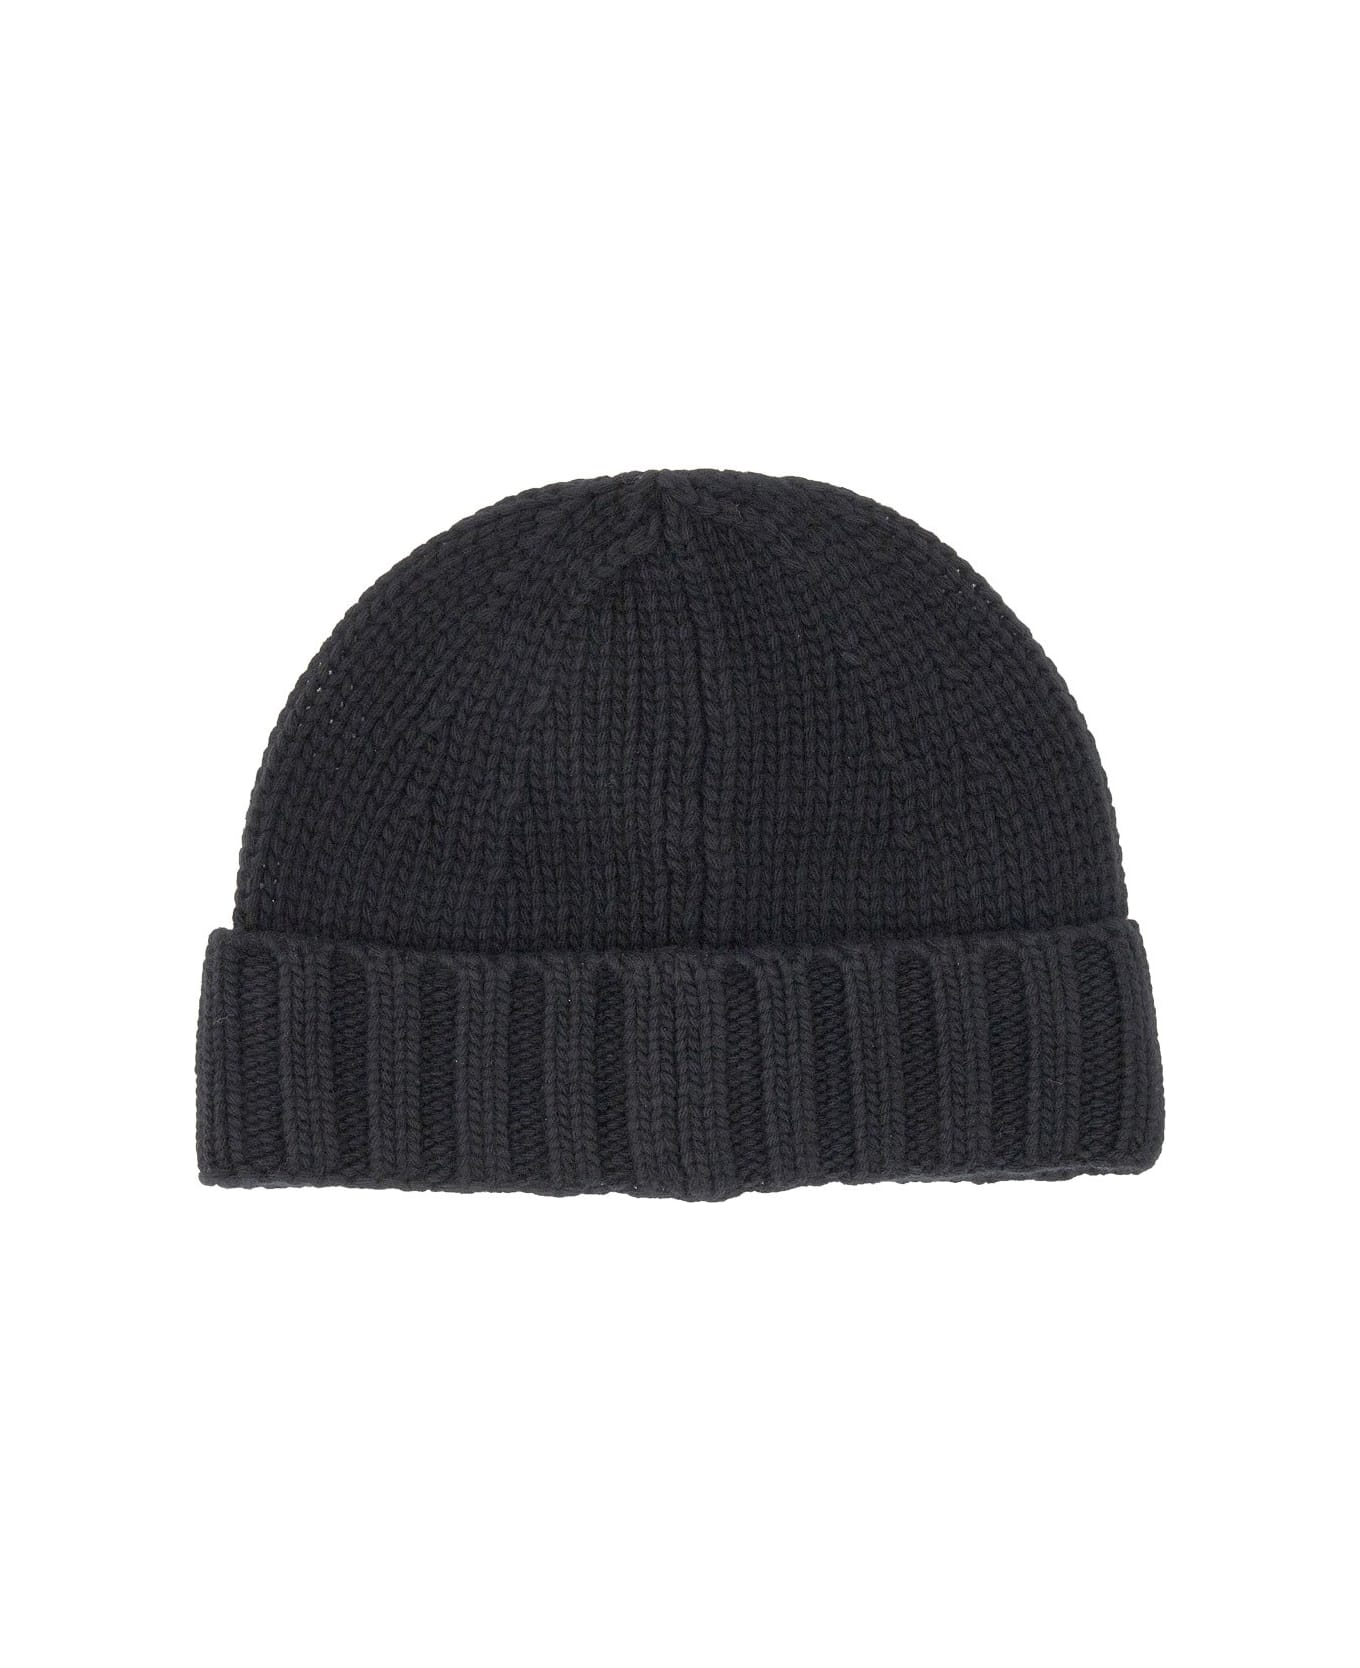 Stone Island Knitted Virgin Wool Hat - black 帽子